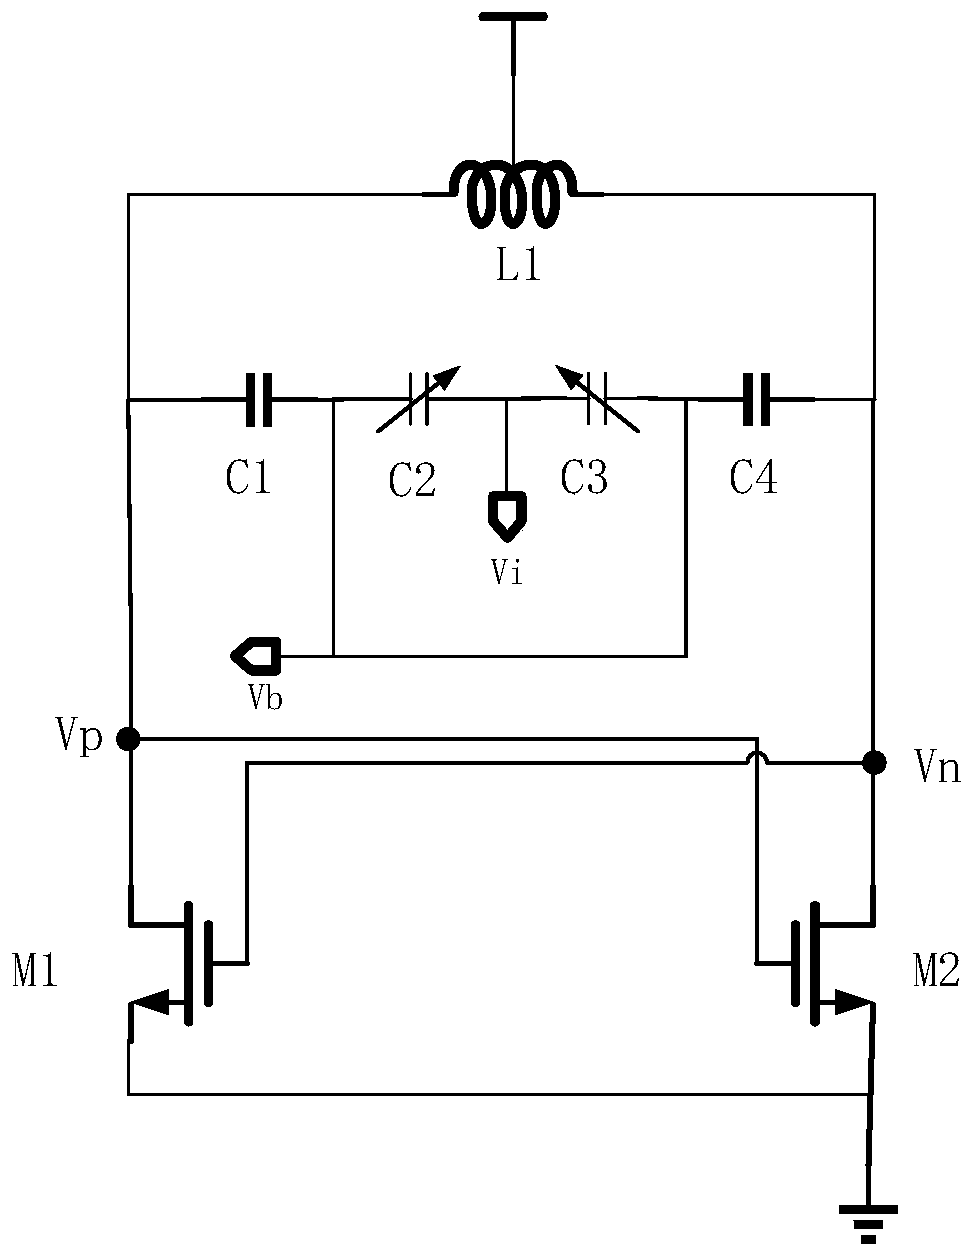 Voltage-controlled oscillator